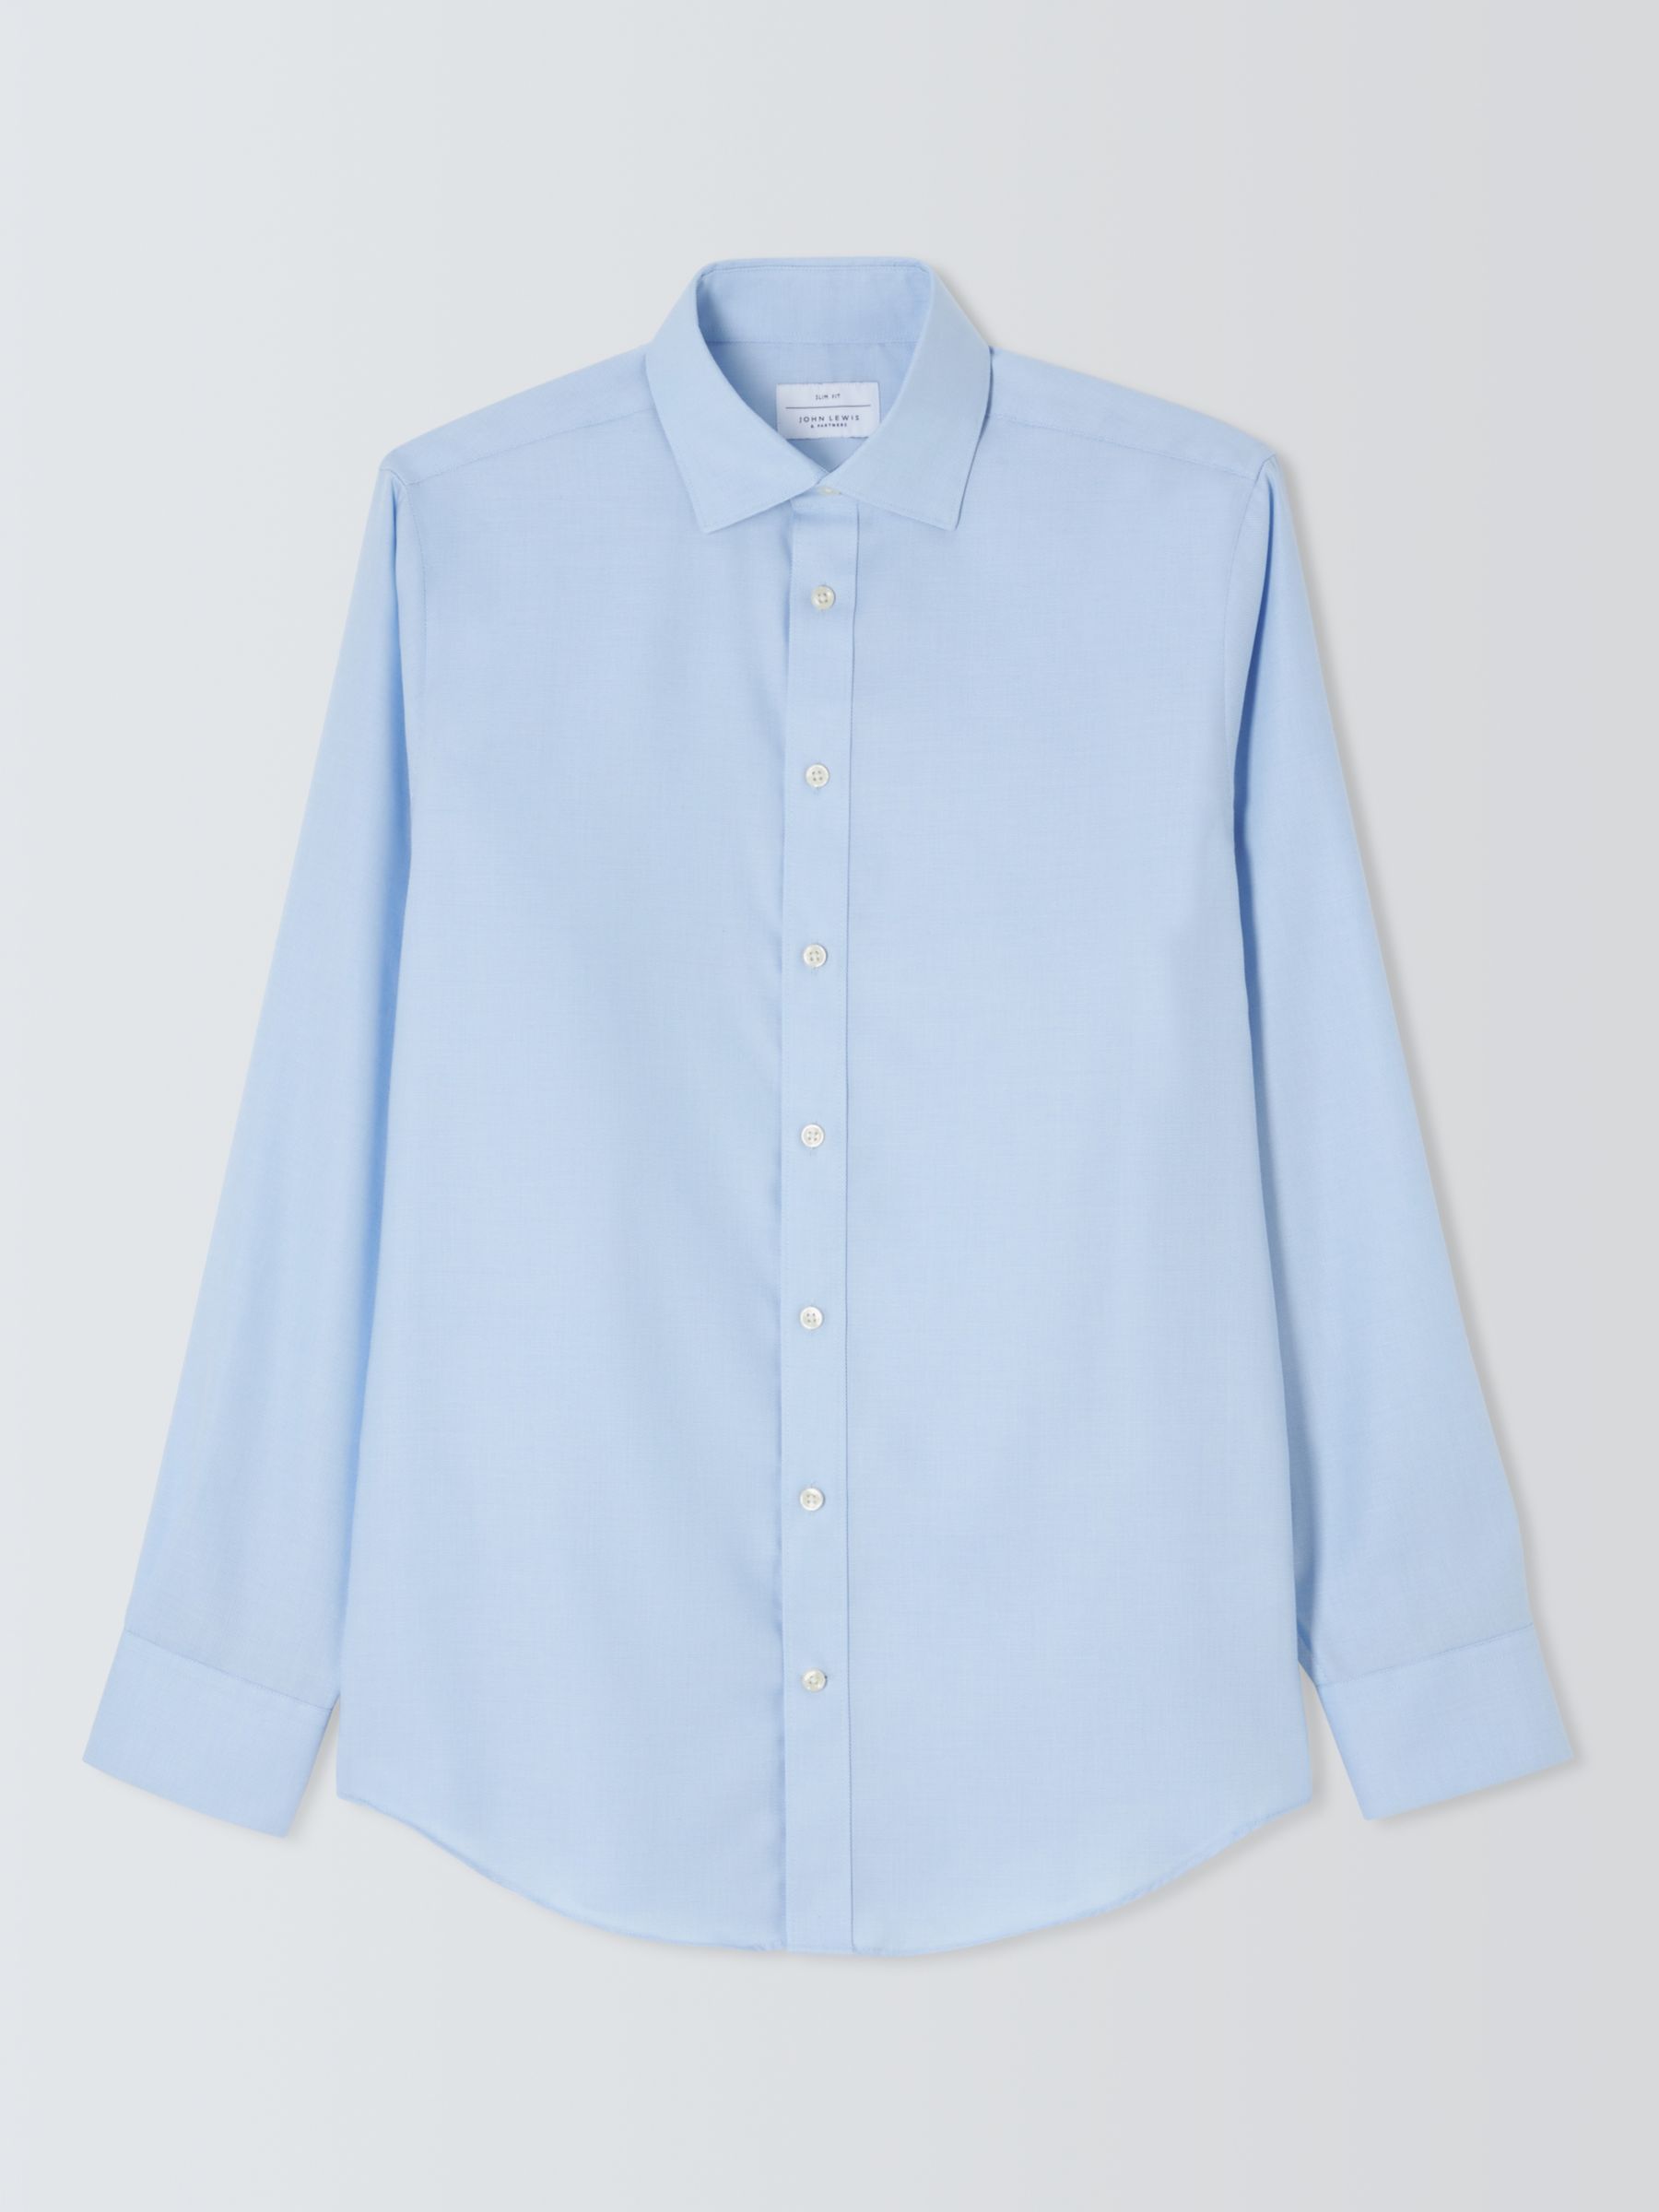 John Lewis Dobby Slim Fit Shirt, Blue at John Lewis & Partners